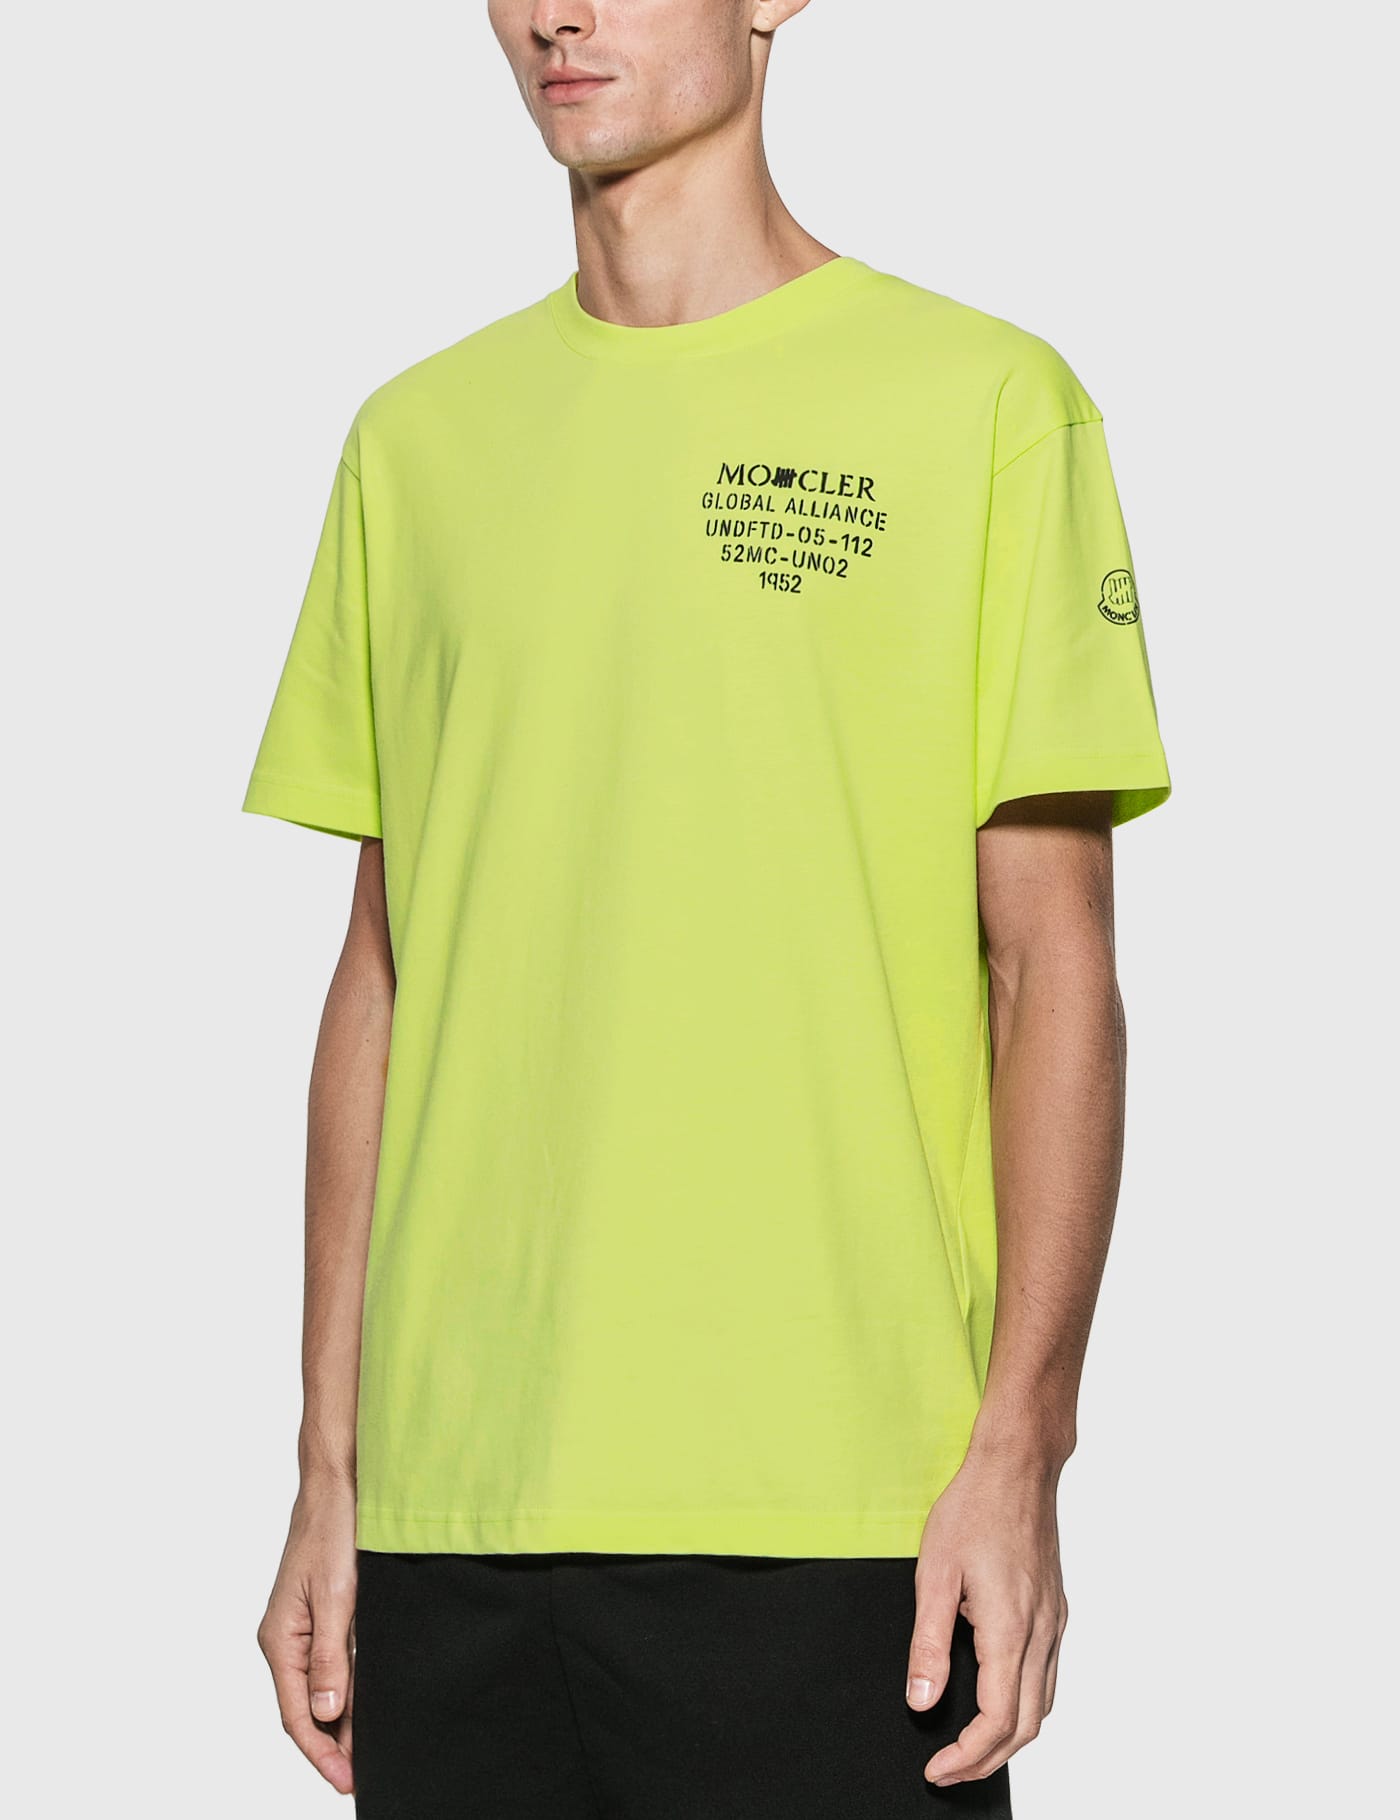 Moncler Genius - 1952 x UNDEFEATED Logo T-Shirt | HBX - Globally 